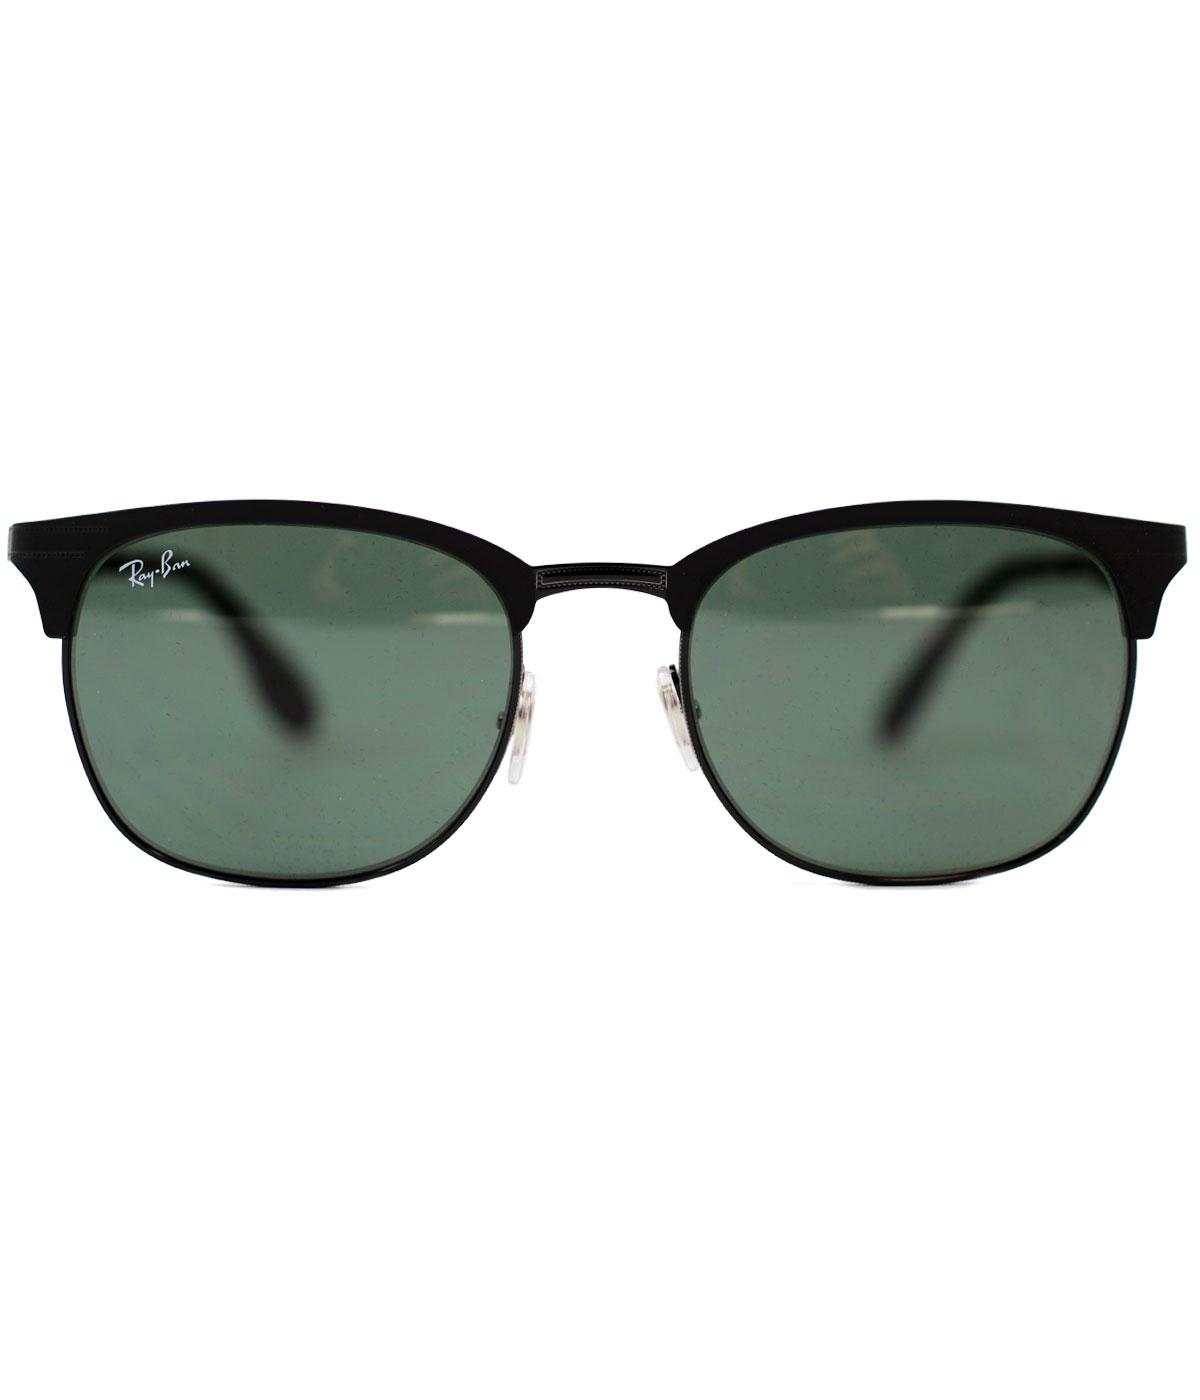 ray ban thin frame sunglasses, OFF 77%,Buy!